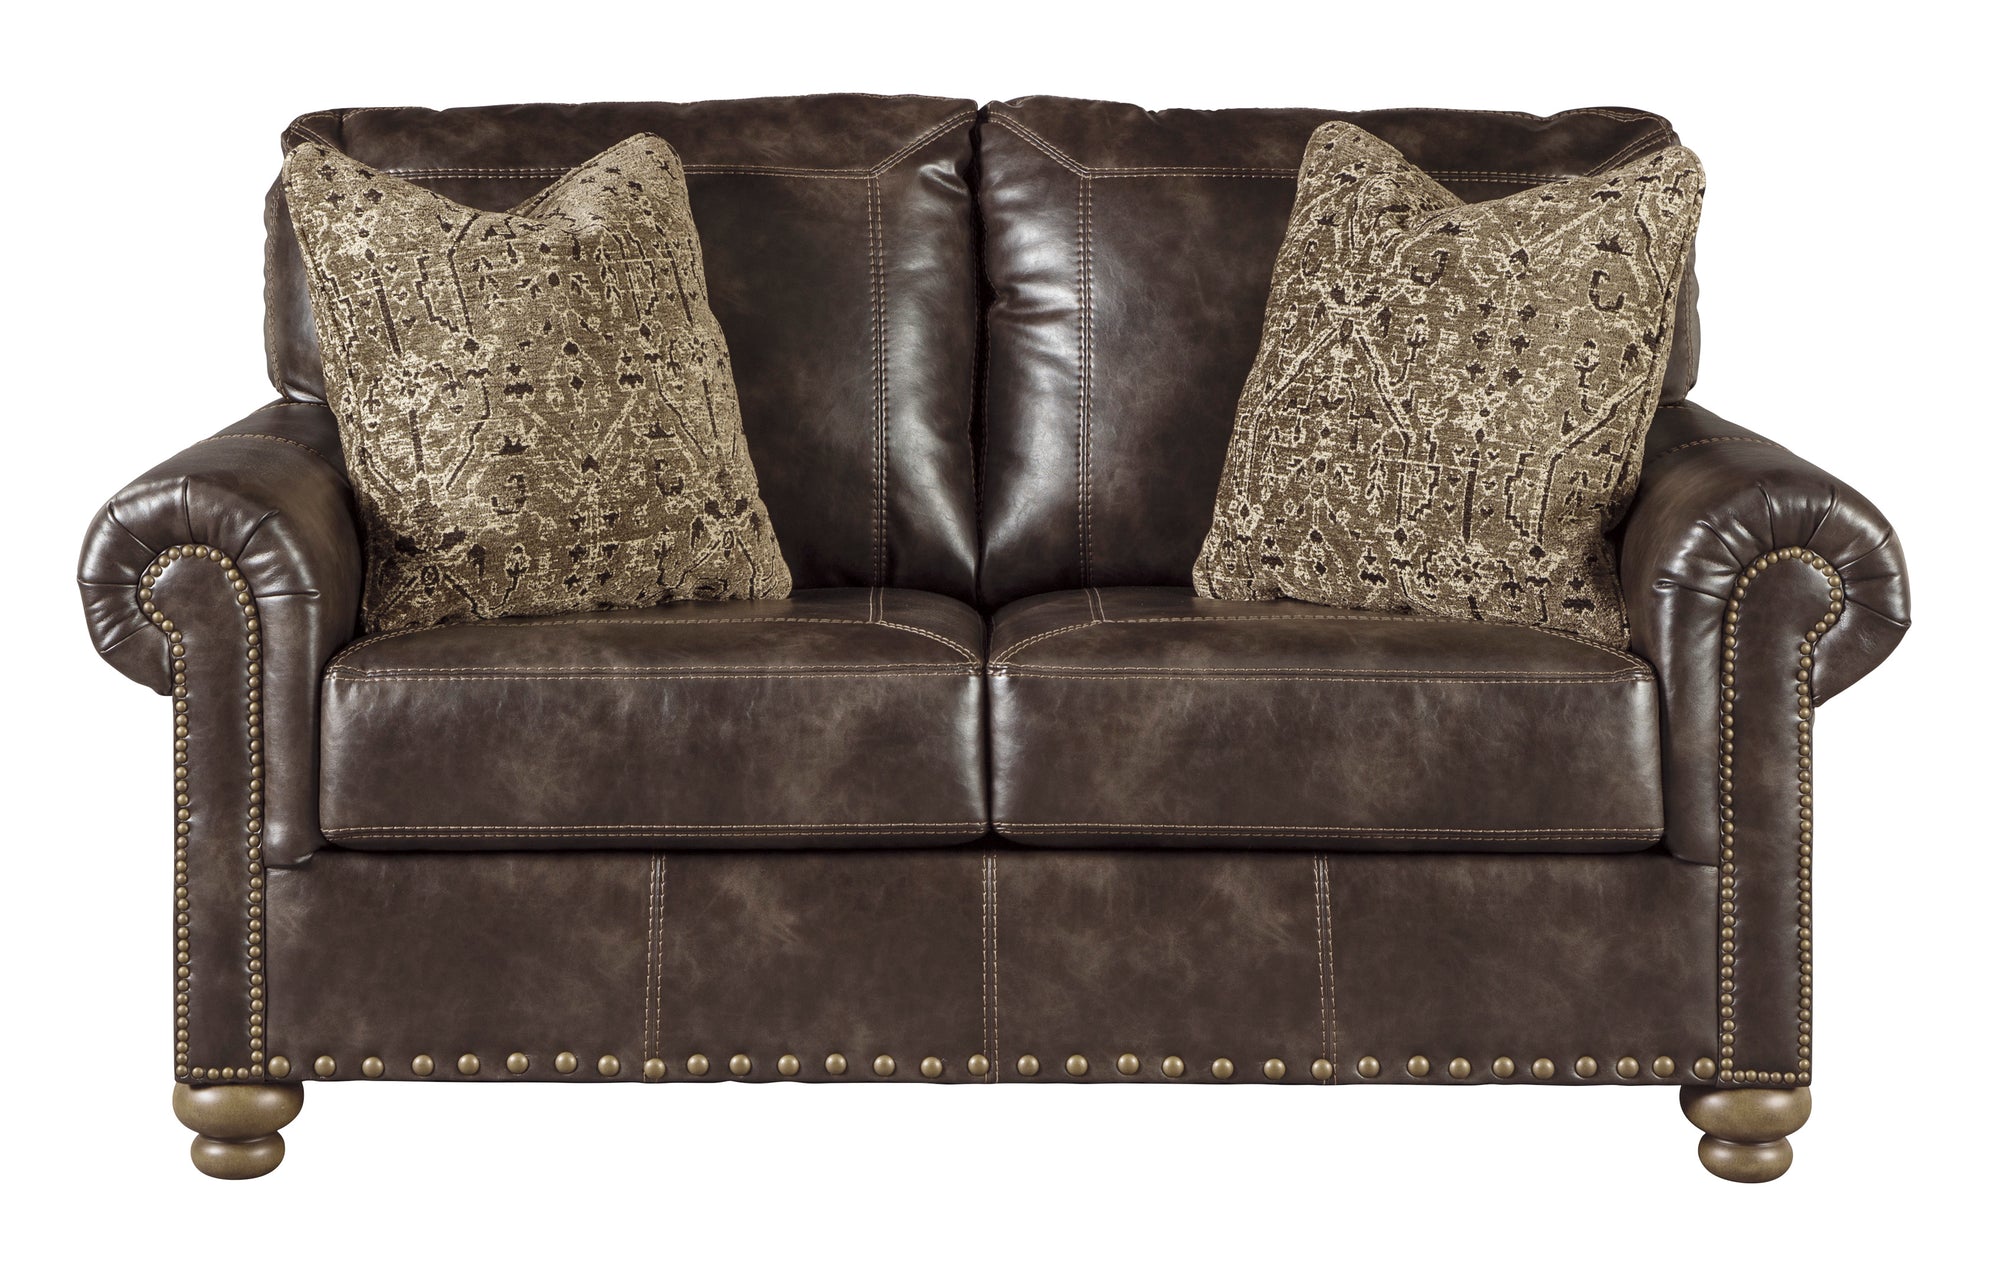 916 FI-A Sofa and Loveseat (Faux Leather)